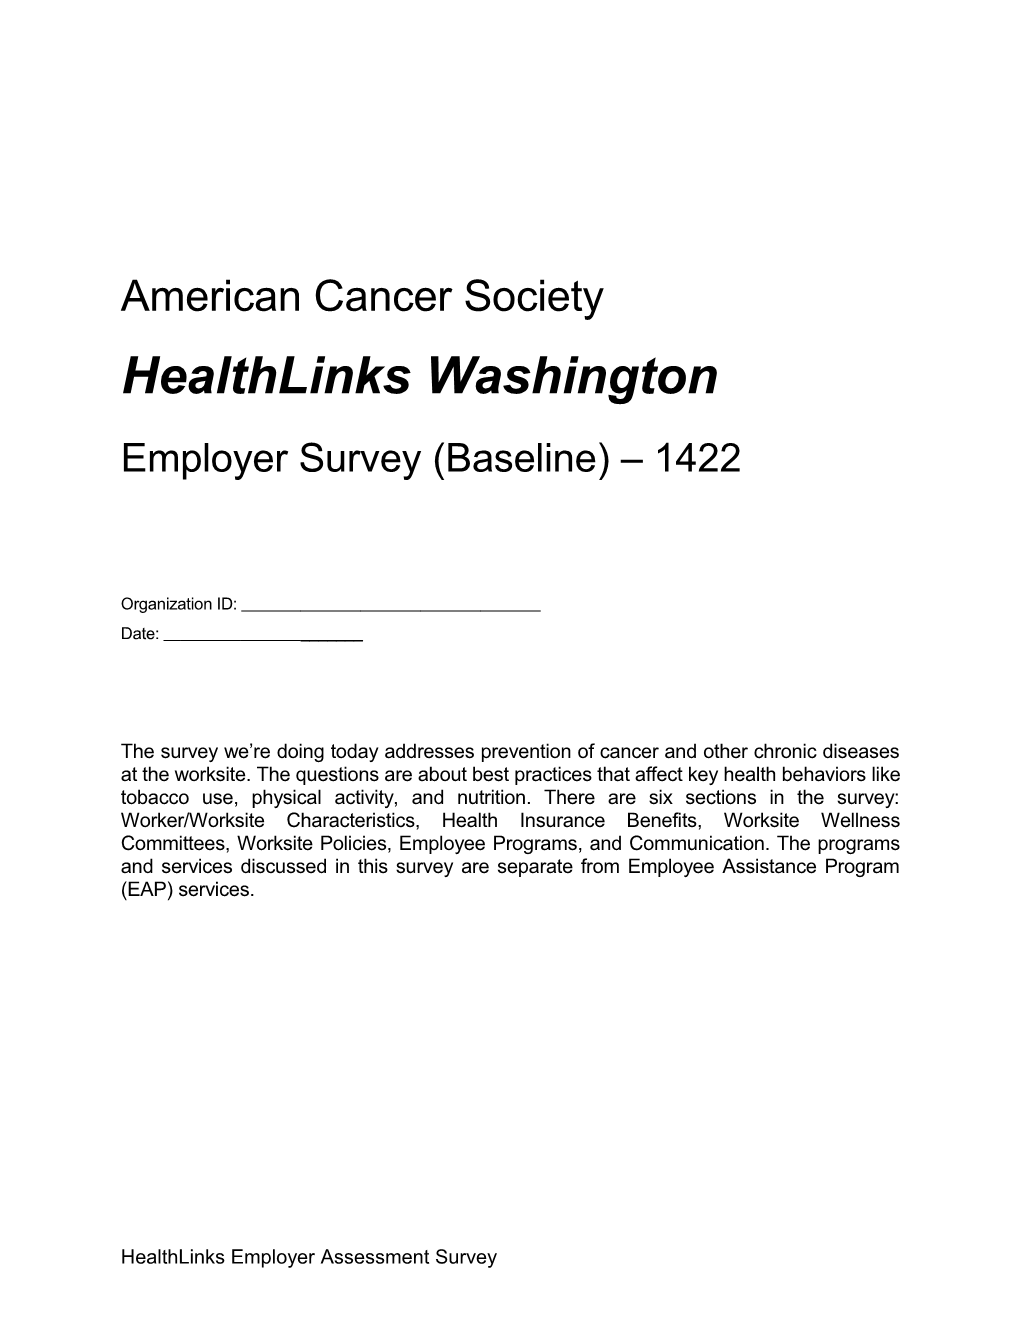 Healthlinks Washington